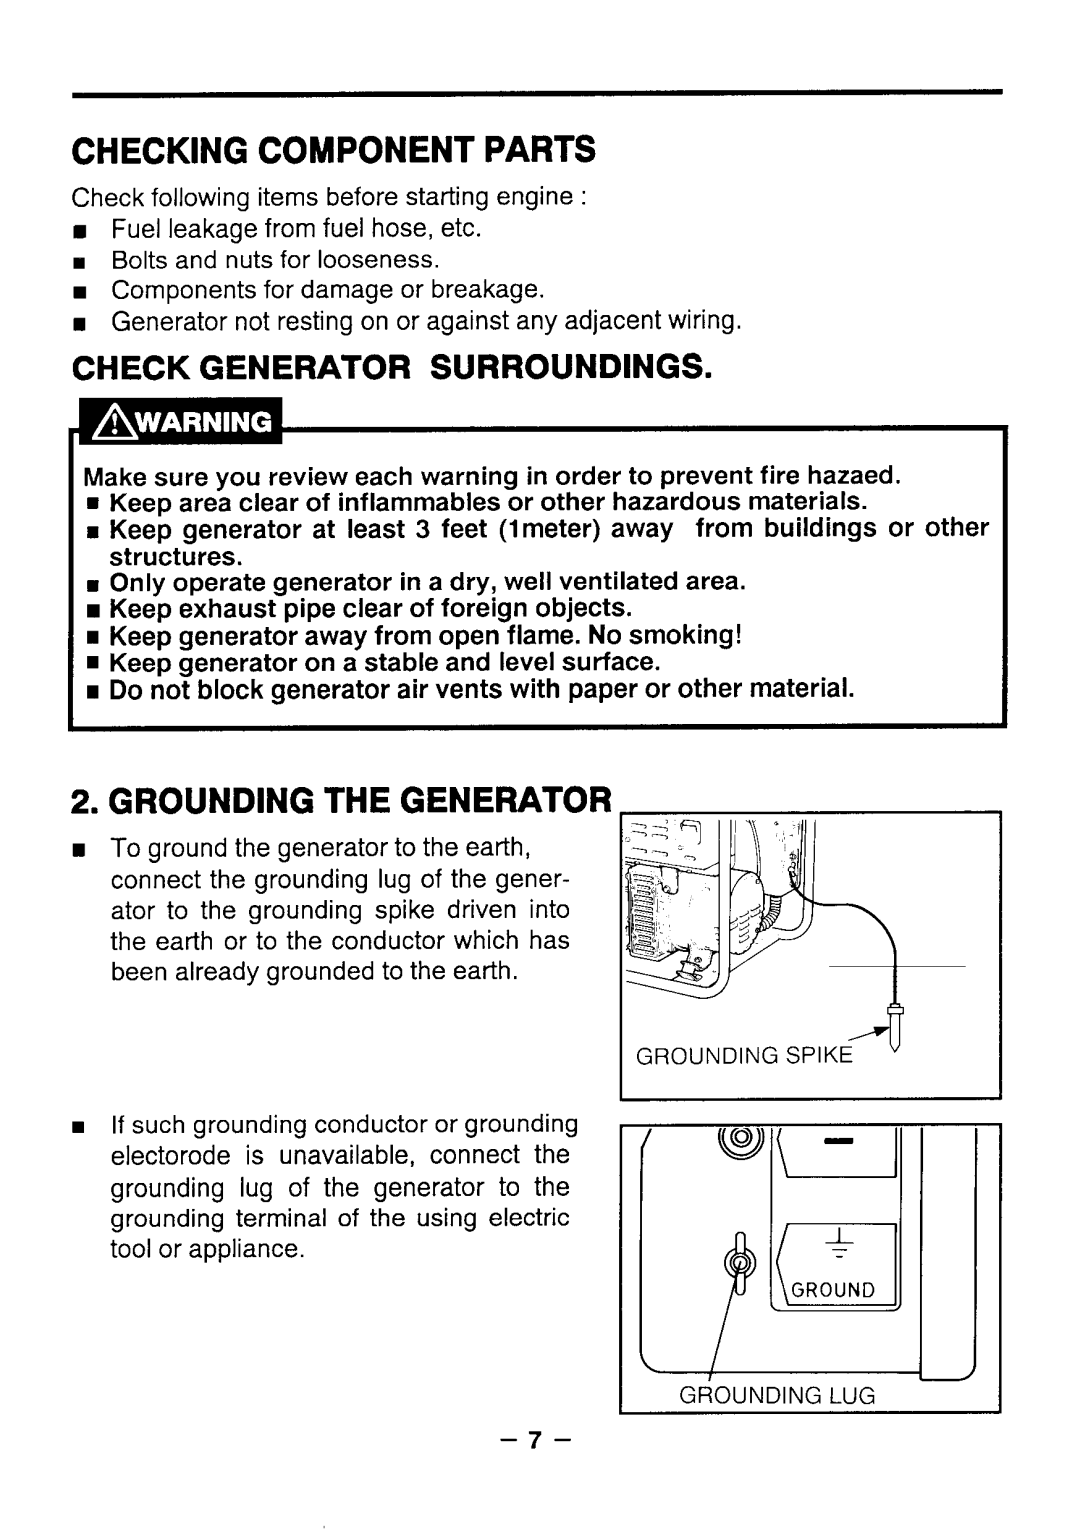 Makita G571O R, G5711R, G351O R, G341O R Checking Component Parts, Check Generator Surroundings, Grounding The Generator 